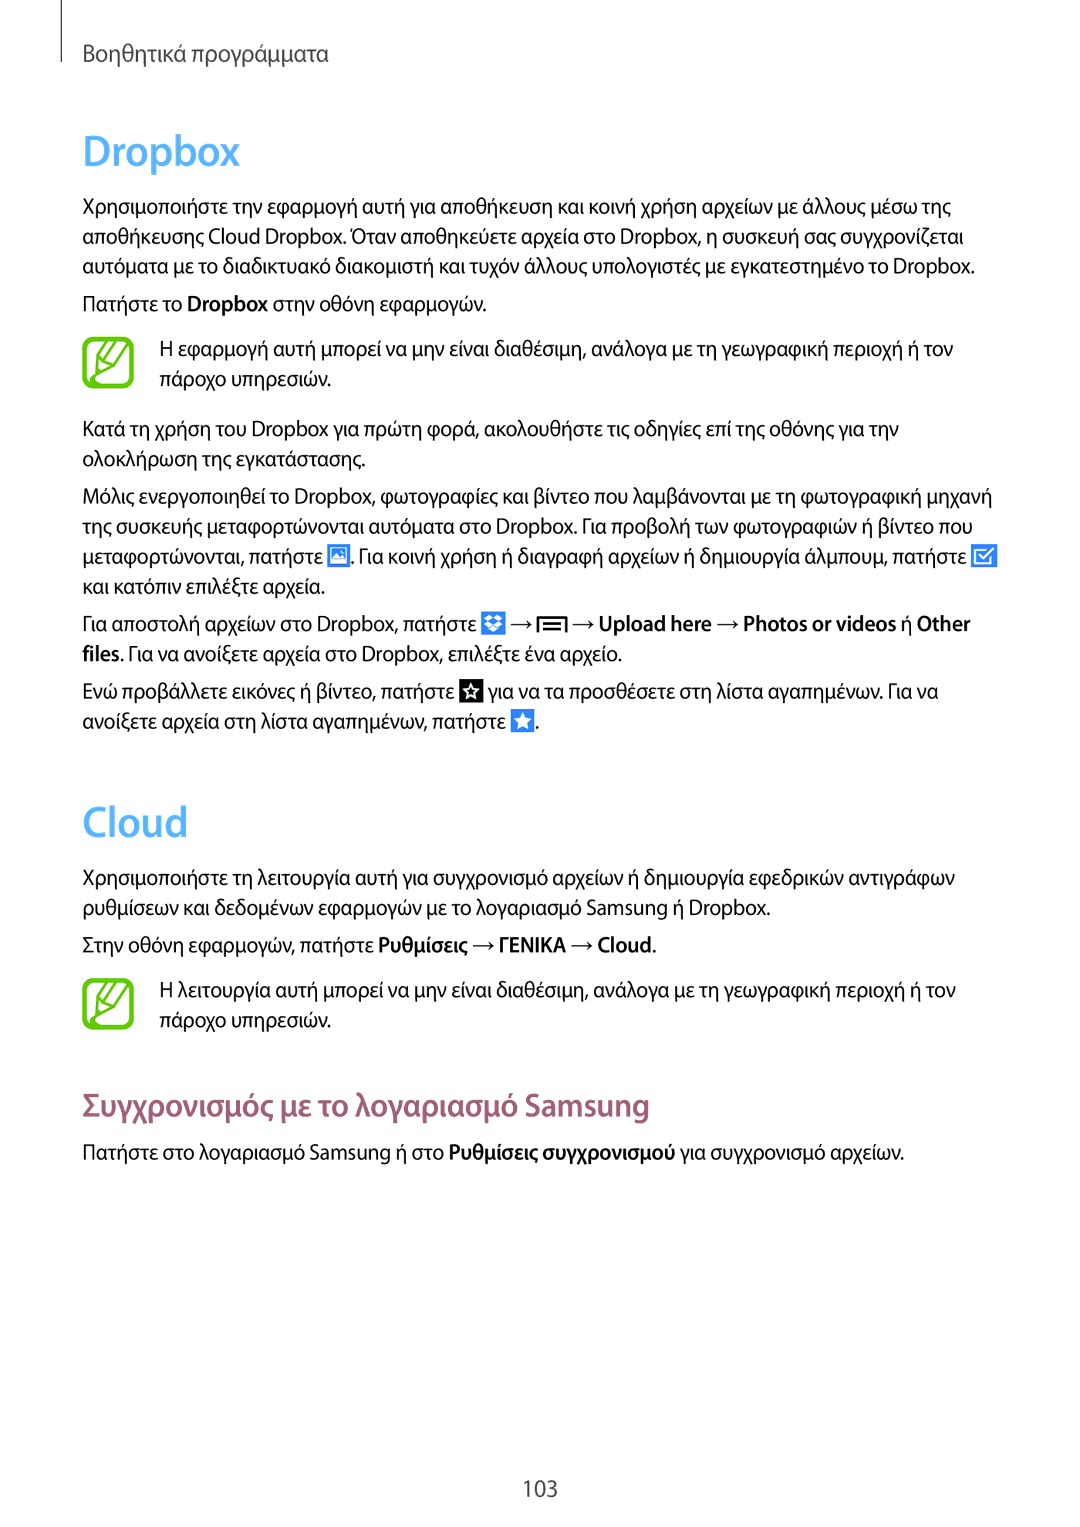 Samsung SM-P6050ZKAEUR, SM-P6050ZWAEUR manual Dropbox, Cloud, Συγχρονισμός με το λογαριασμό Samsung 